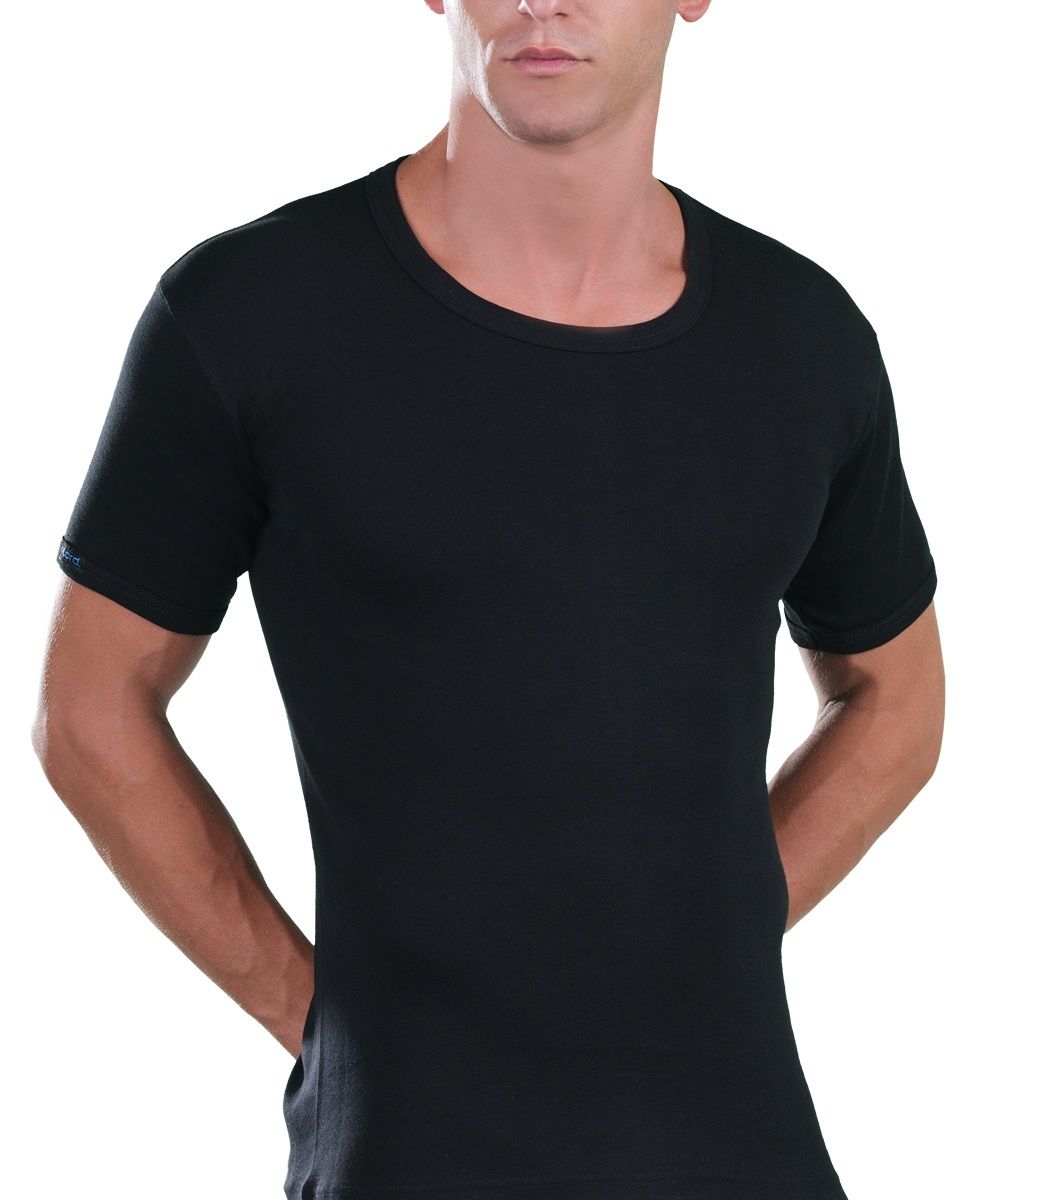 Open Neck T-Shirt, xlarge size, black